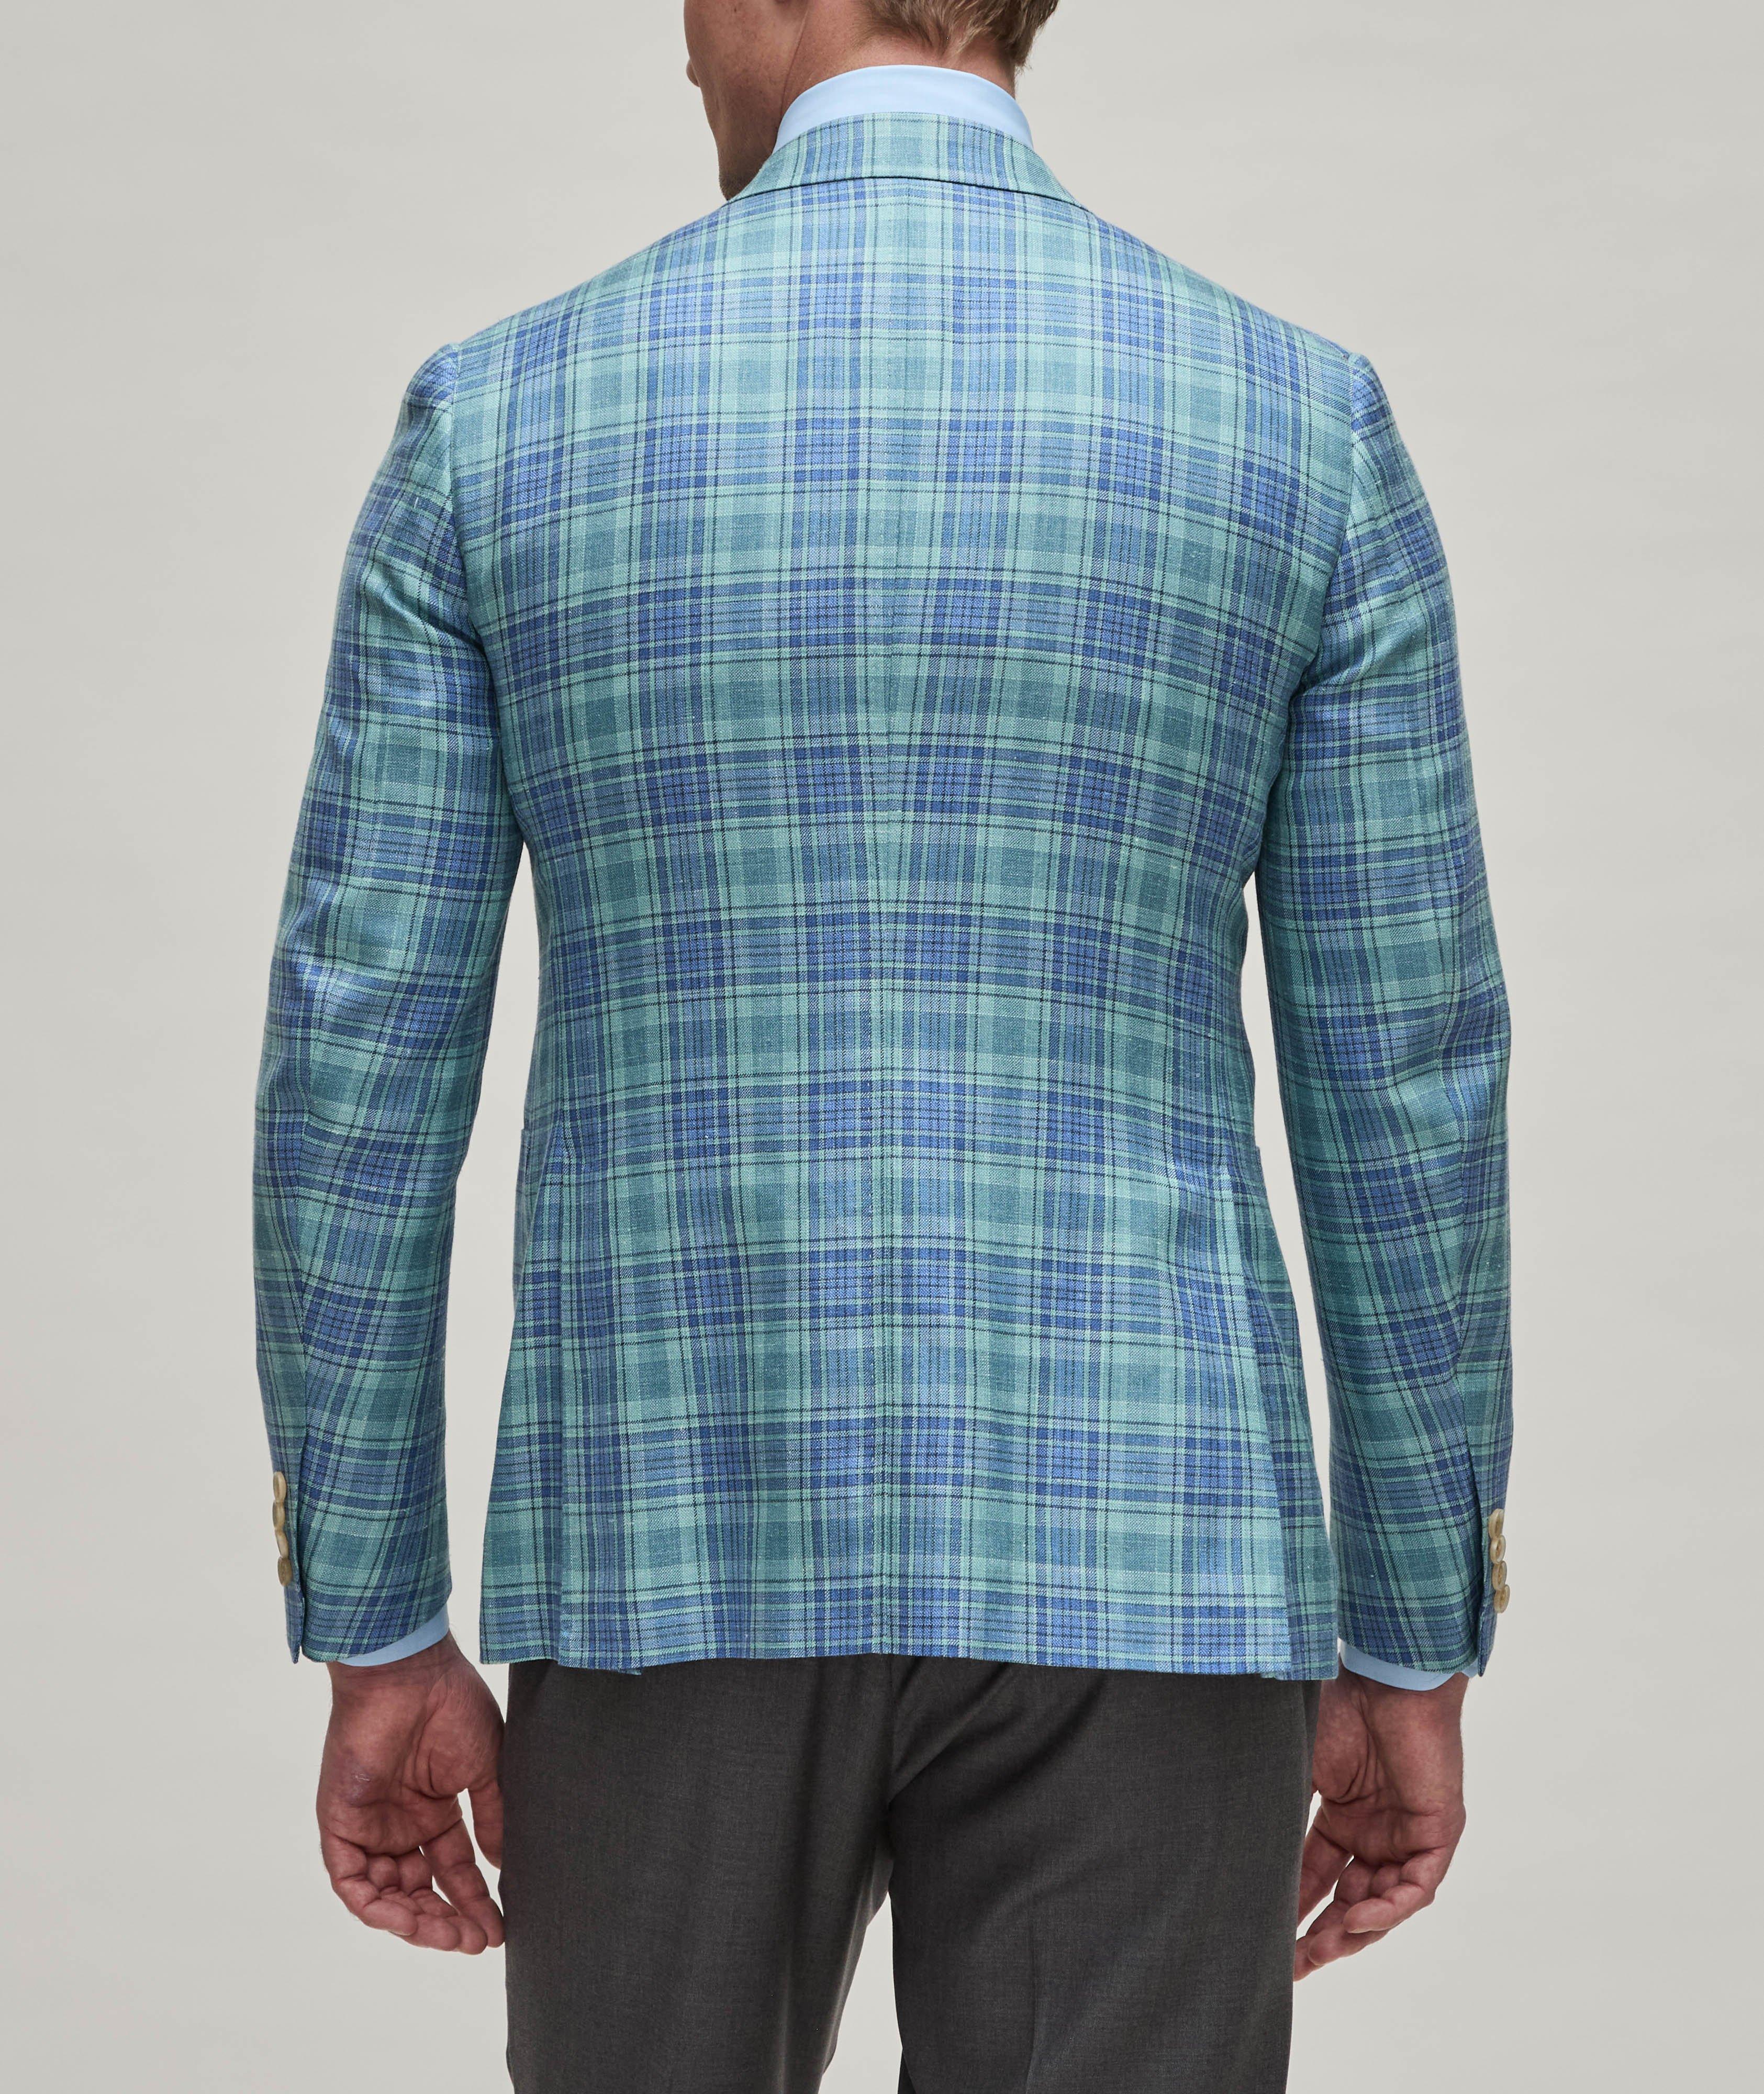 Capri Plaid Wool, Silk & Linen Sport Jacket image 2